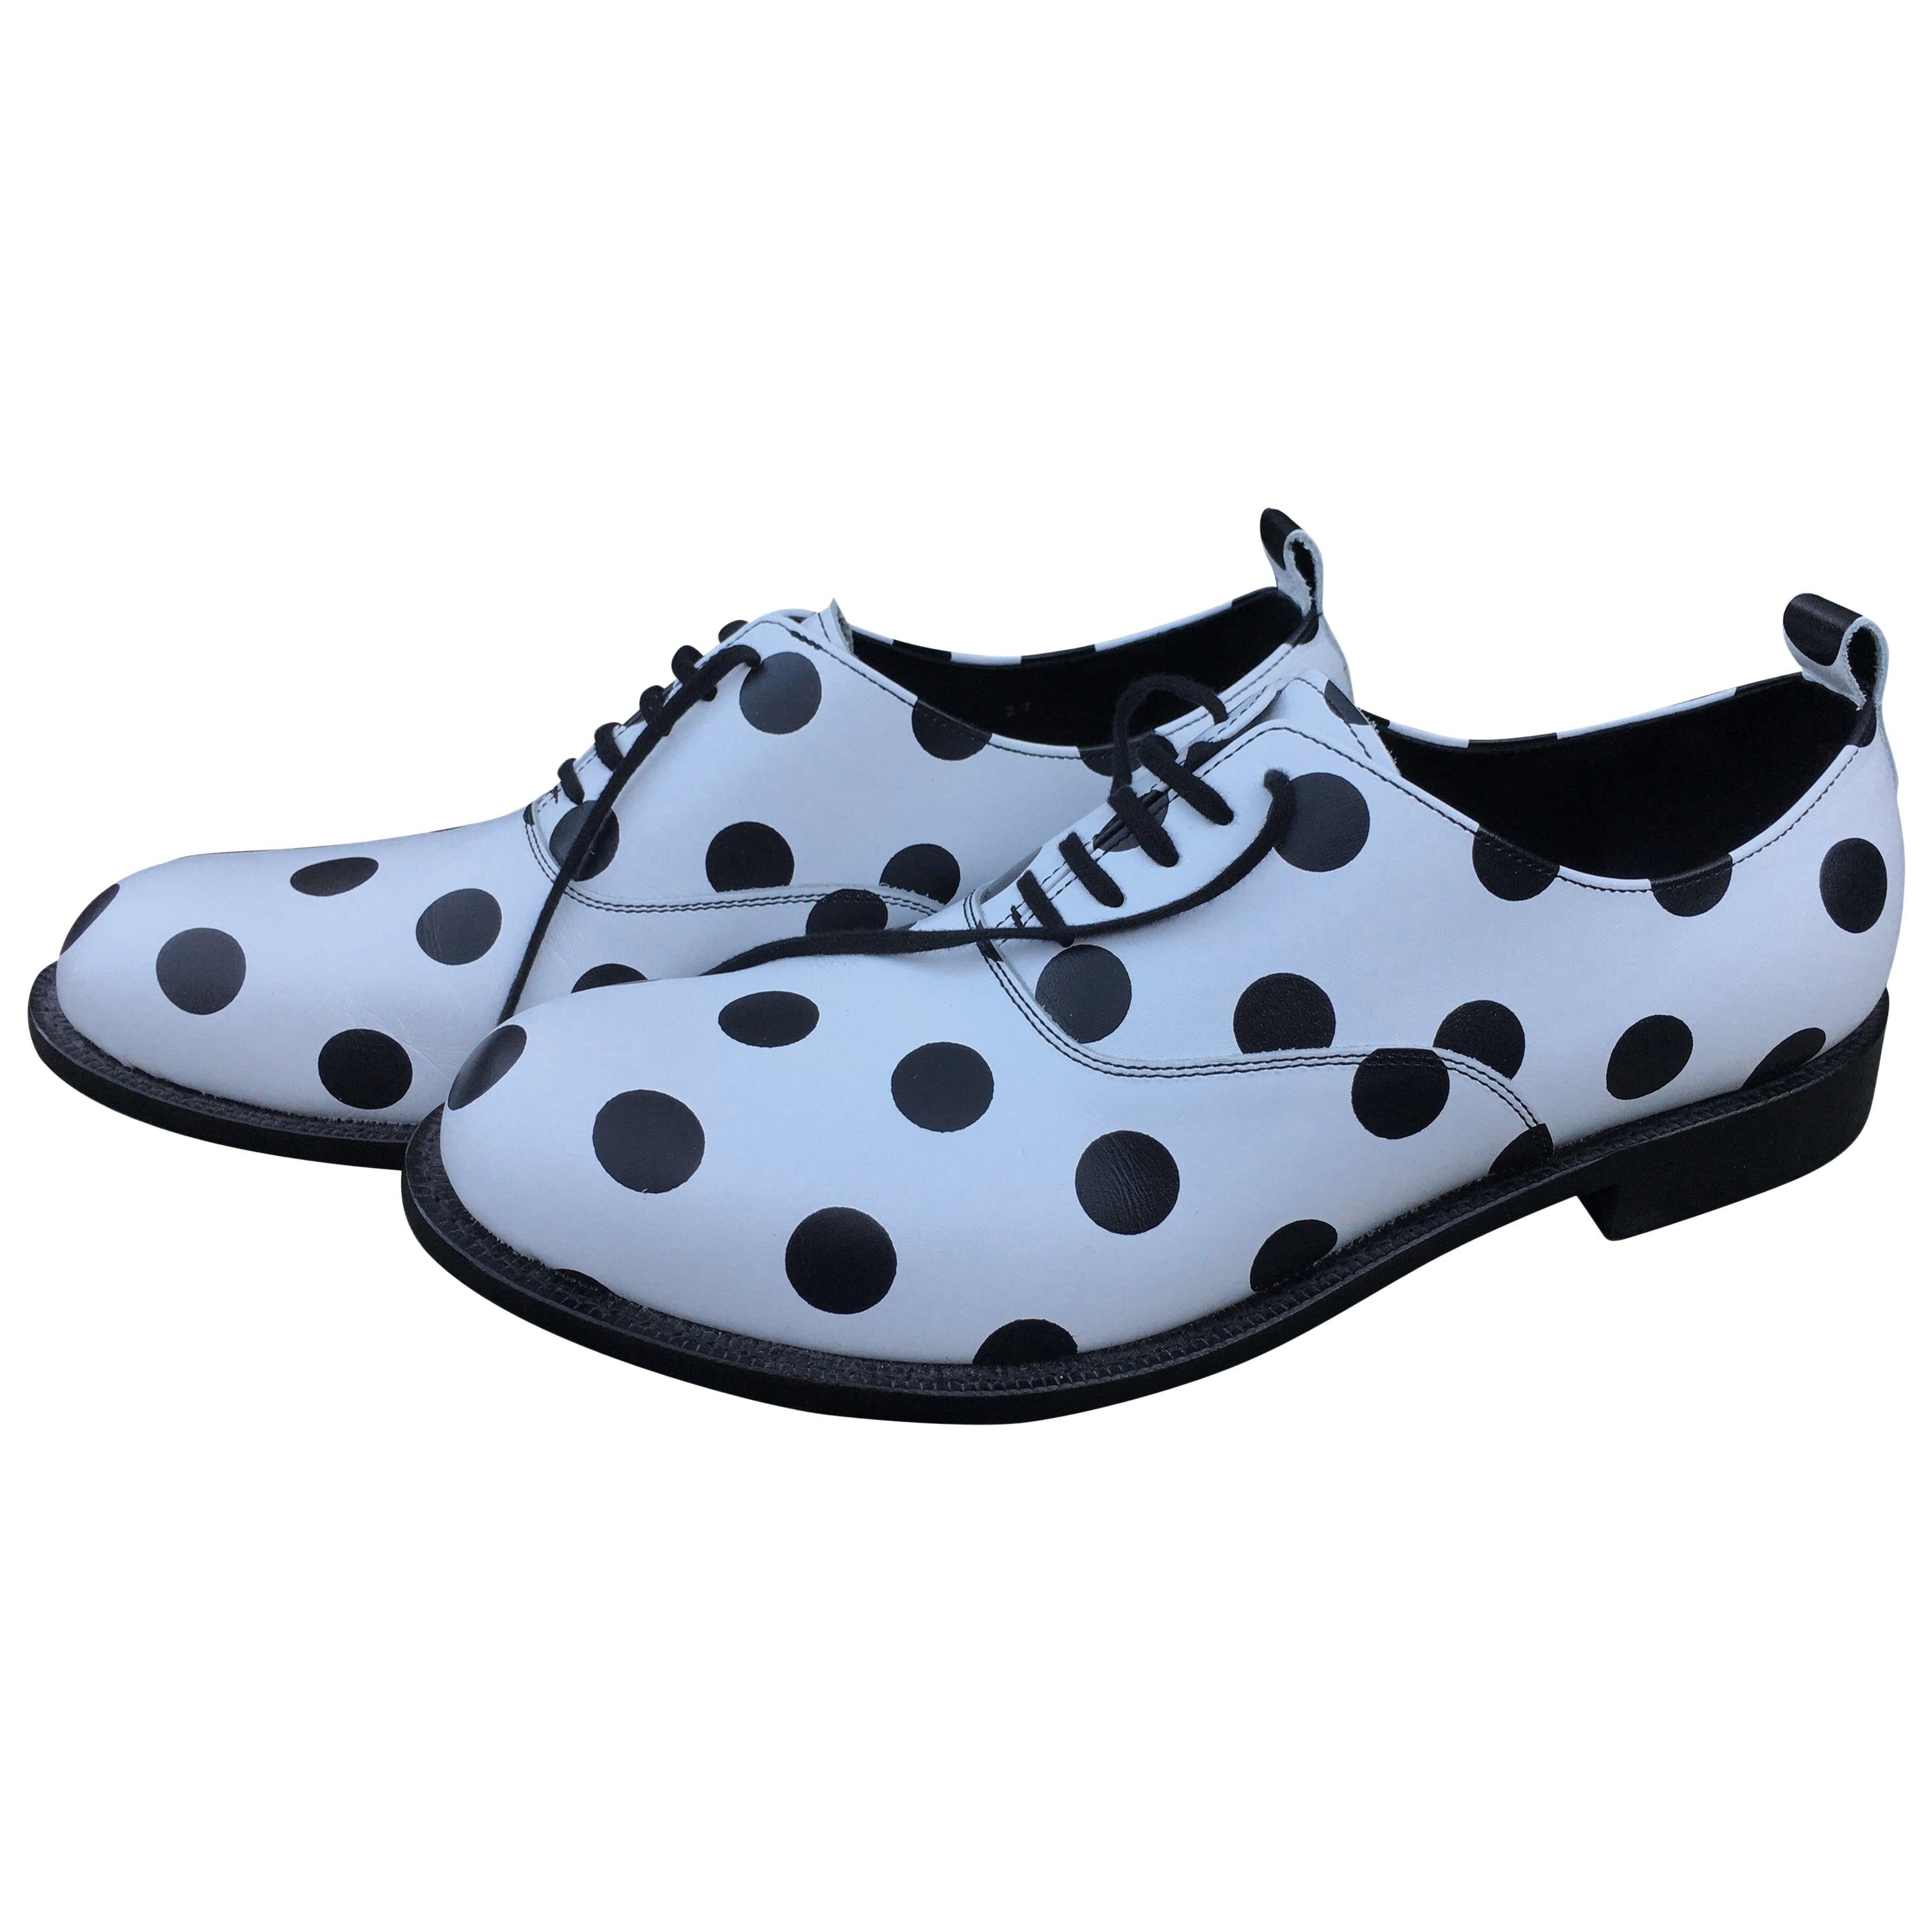 Comme des Garcons Mens Polka Dot Shoes Size 9.5 US